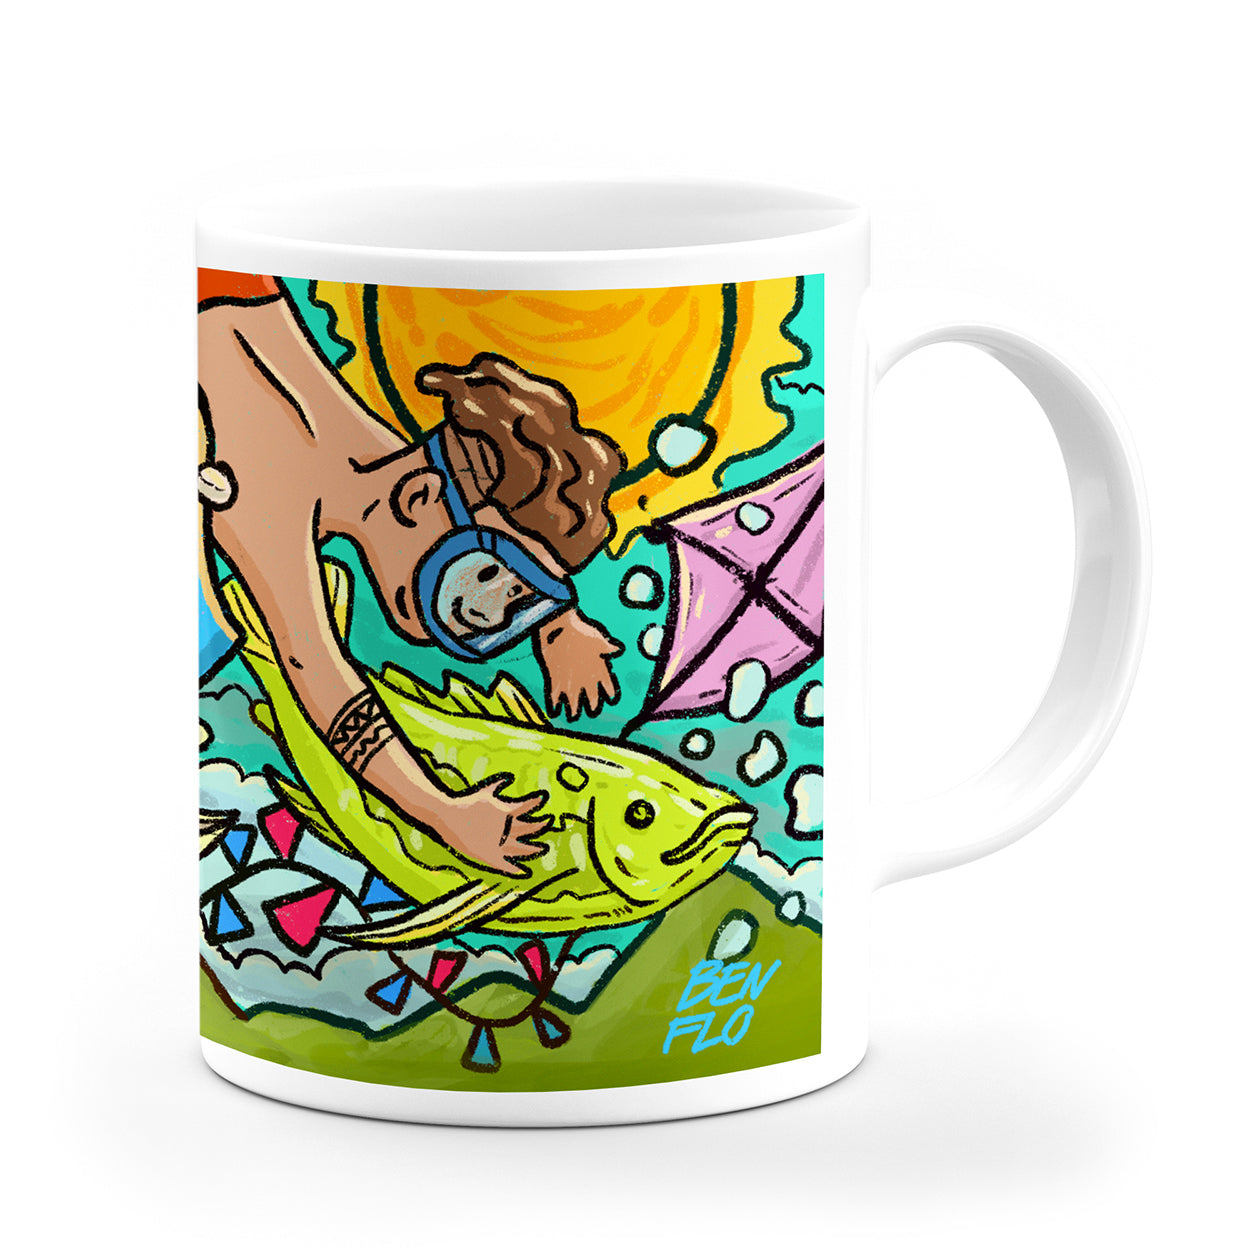 cup coffee scuba diver gift idea freediver snorkeling Apo island Dauin travel tourist underwater mug Dumaguete city Negros Oriental souvenir art designer collectible